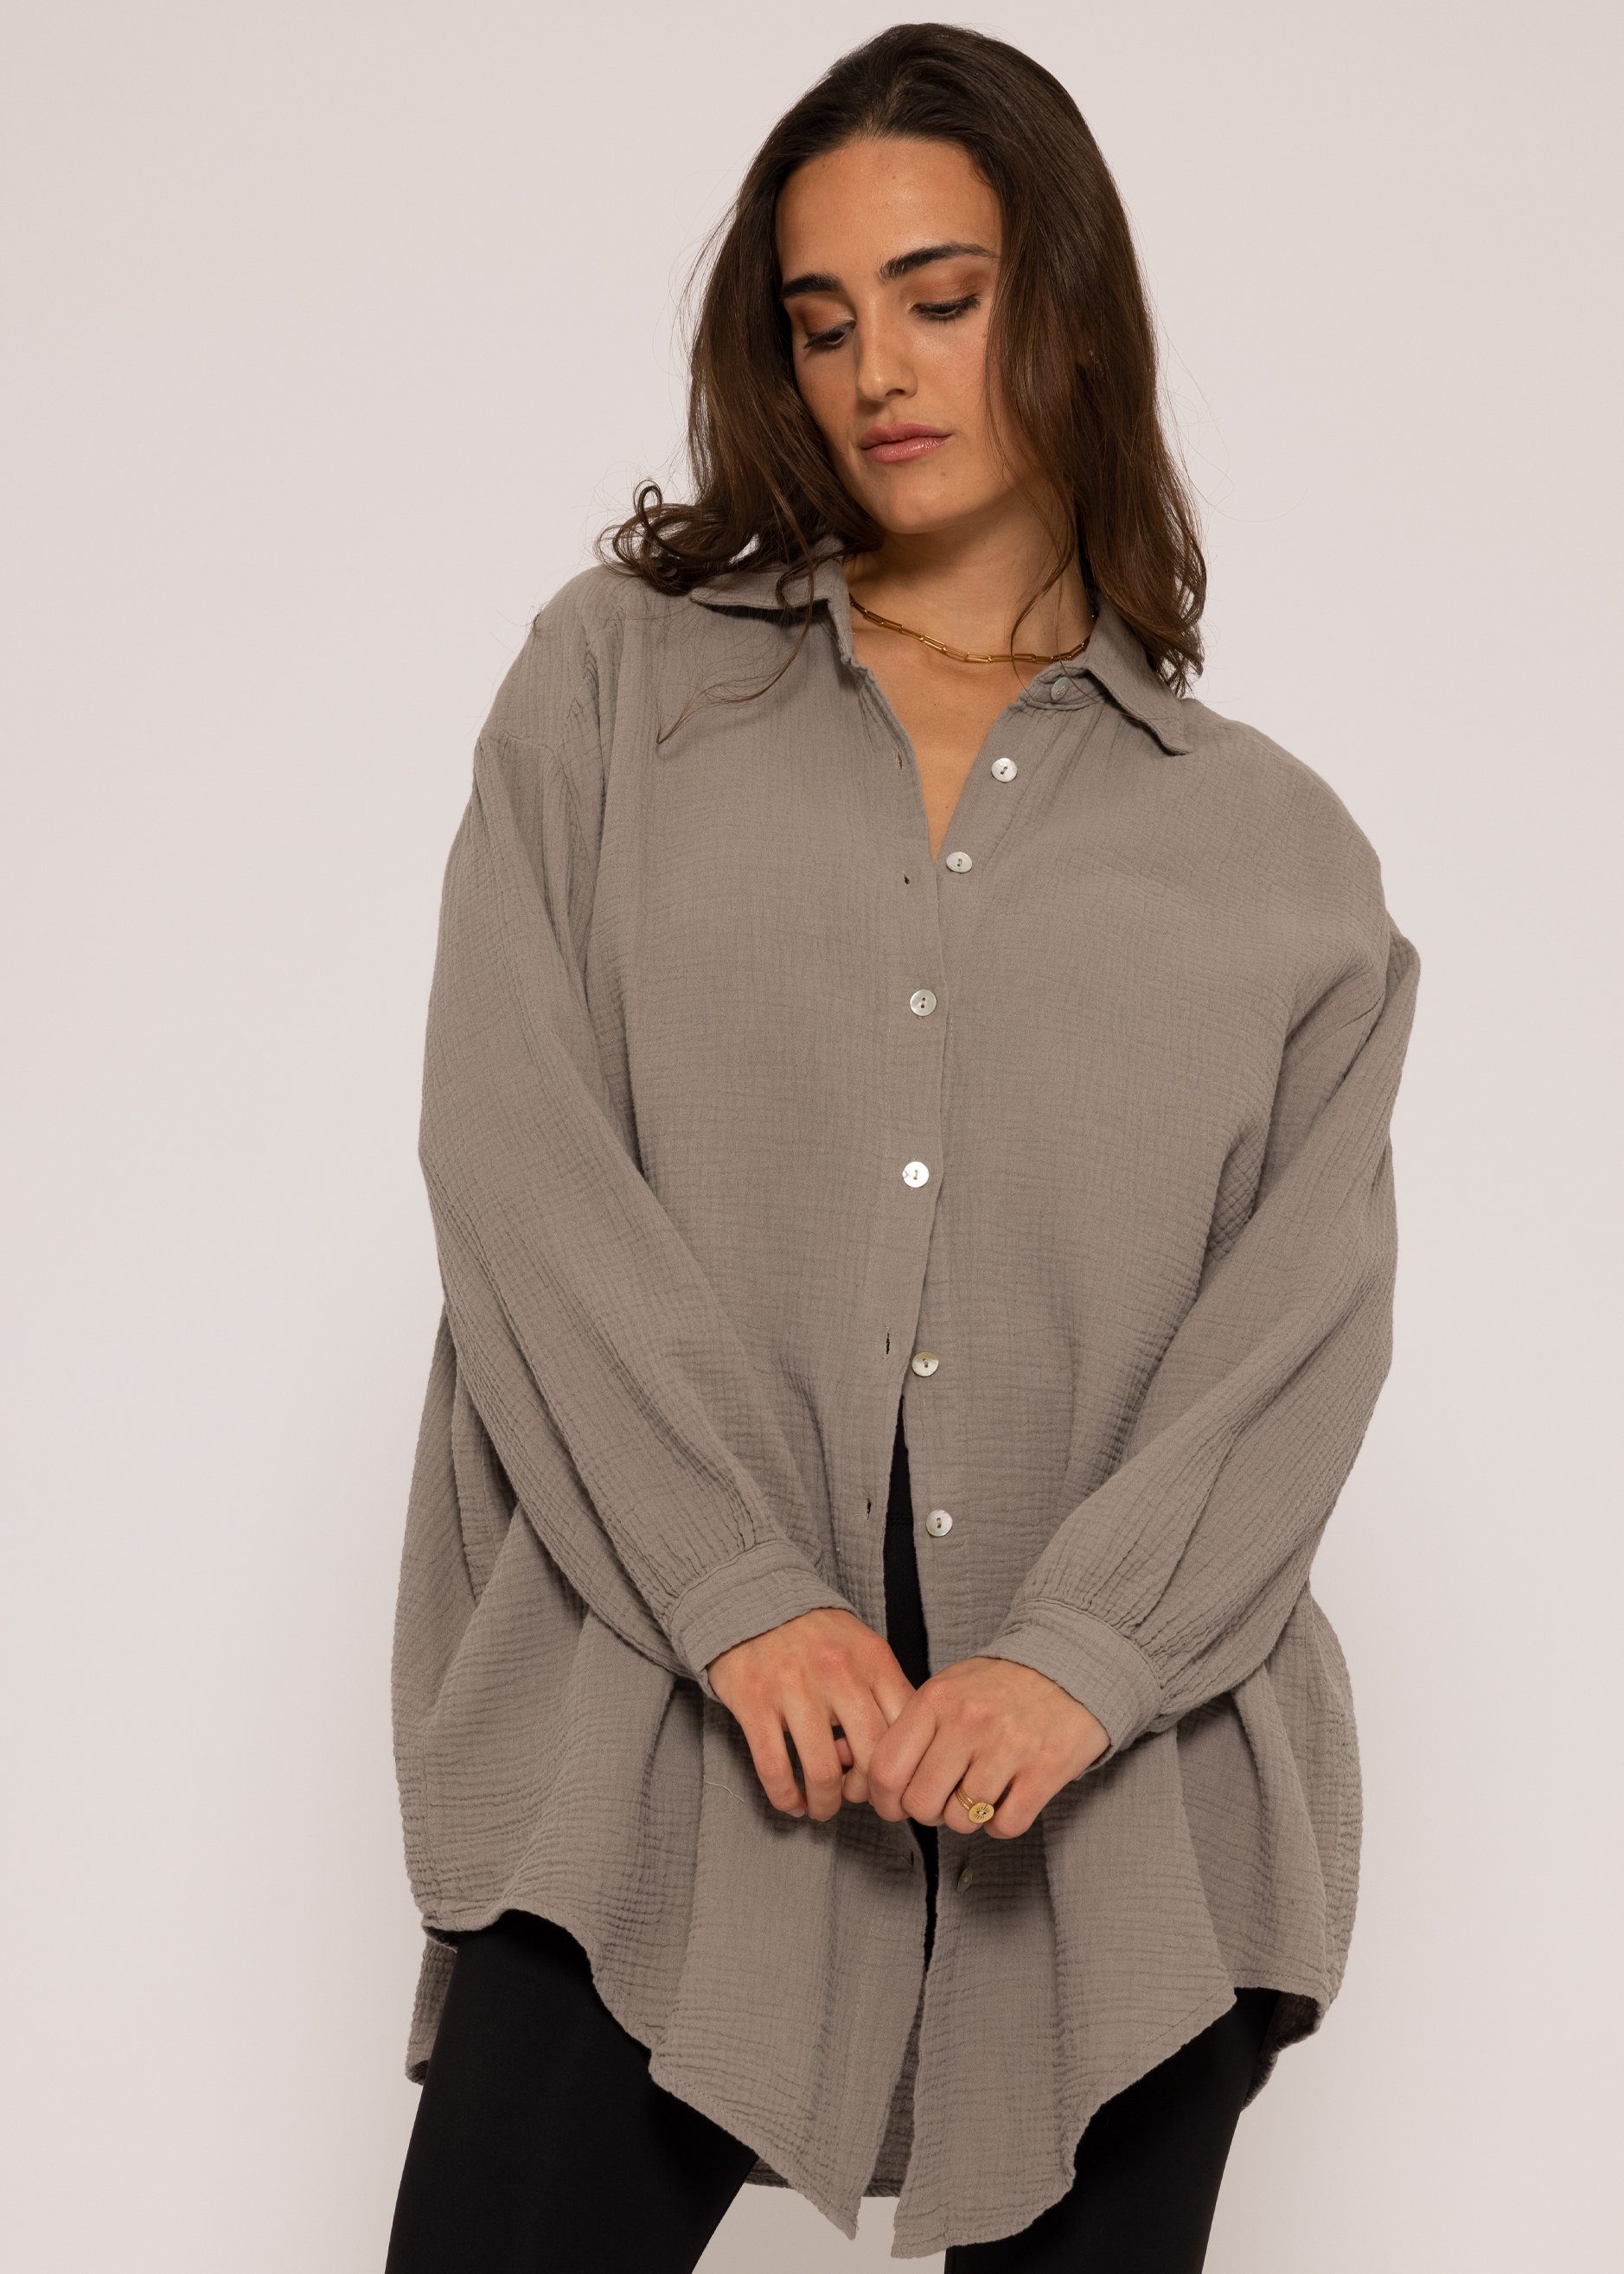 SASSYCLASSY Longbluse Oversize Musselin Bluse Damen Langarm Hemdbluse lang aus Baumwolle mit V-Ausschnitt, One Size (Gr. 36-48) Taupe